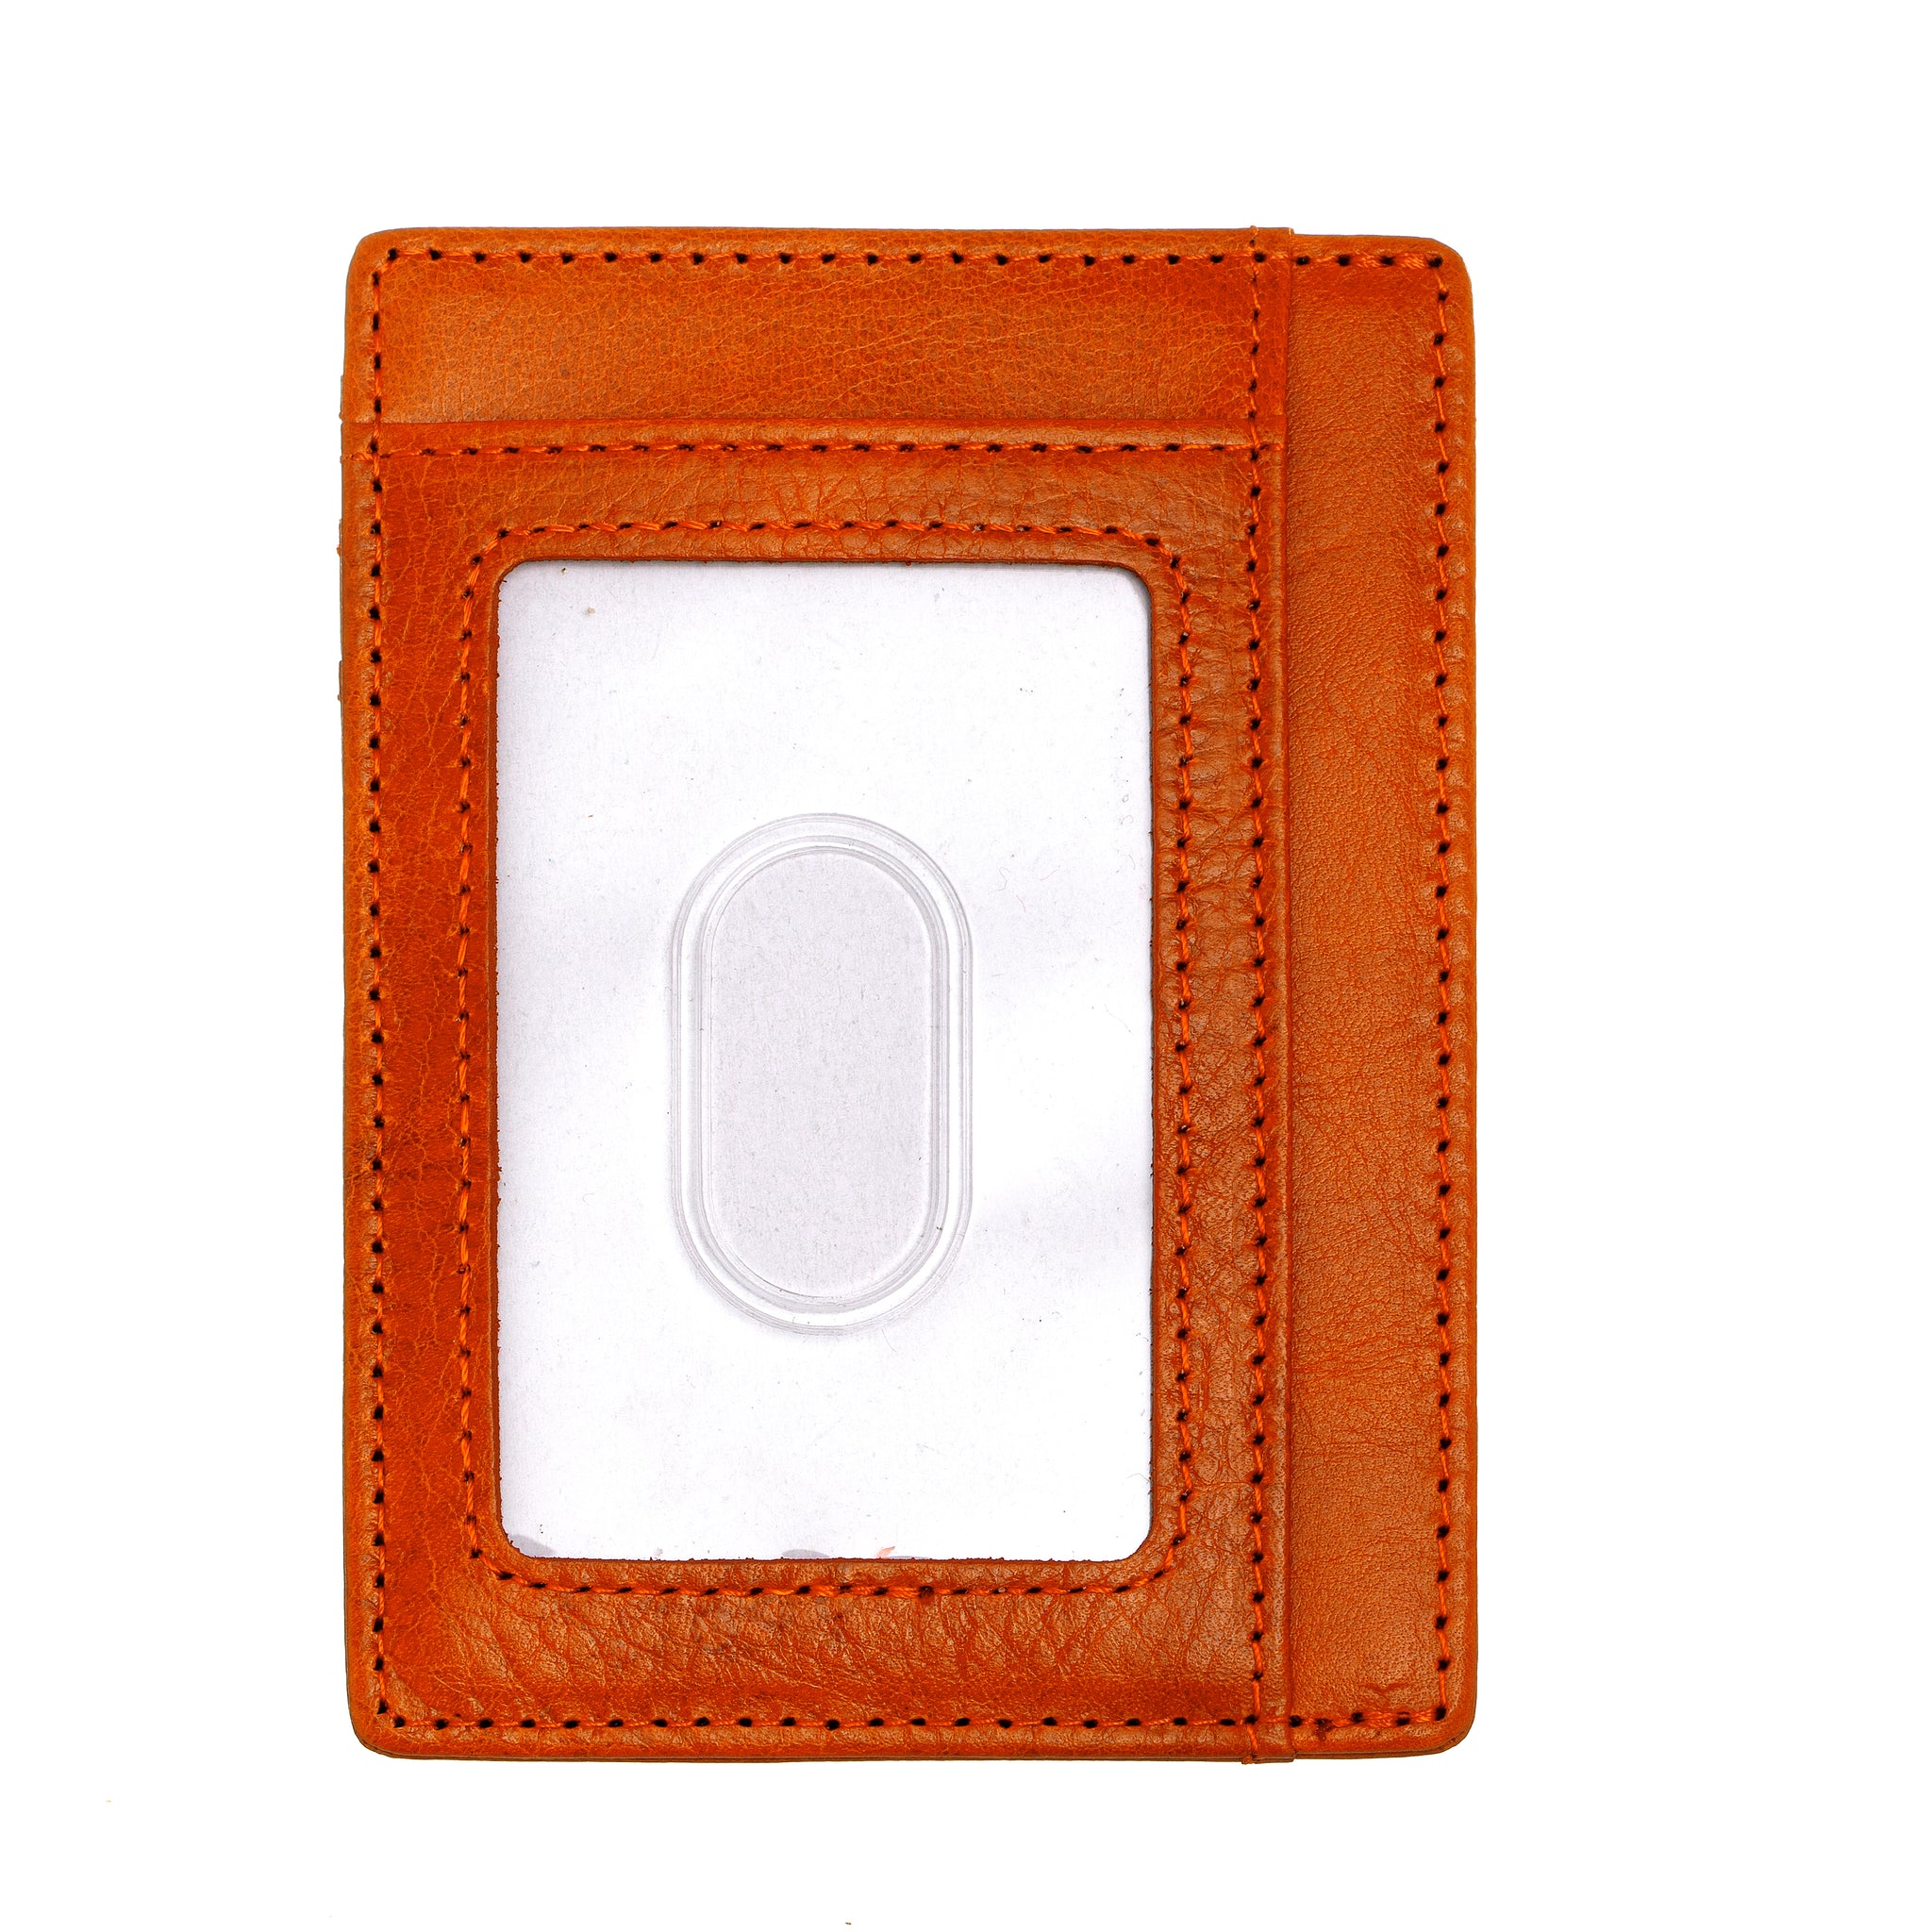 Breed Chase Genuine Leather Front Pocket Wallet - Orange - BRDWALL003-ORG